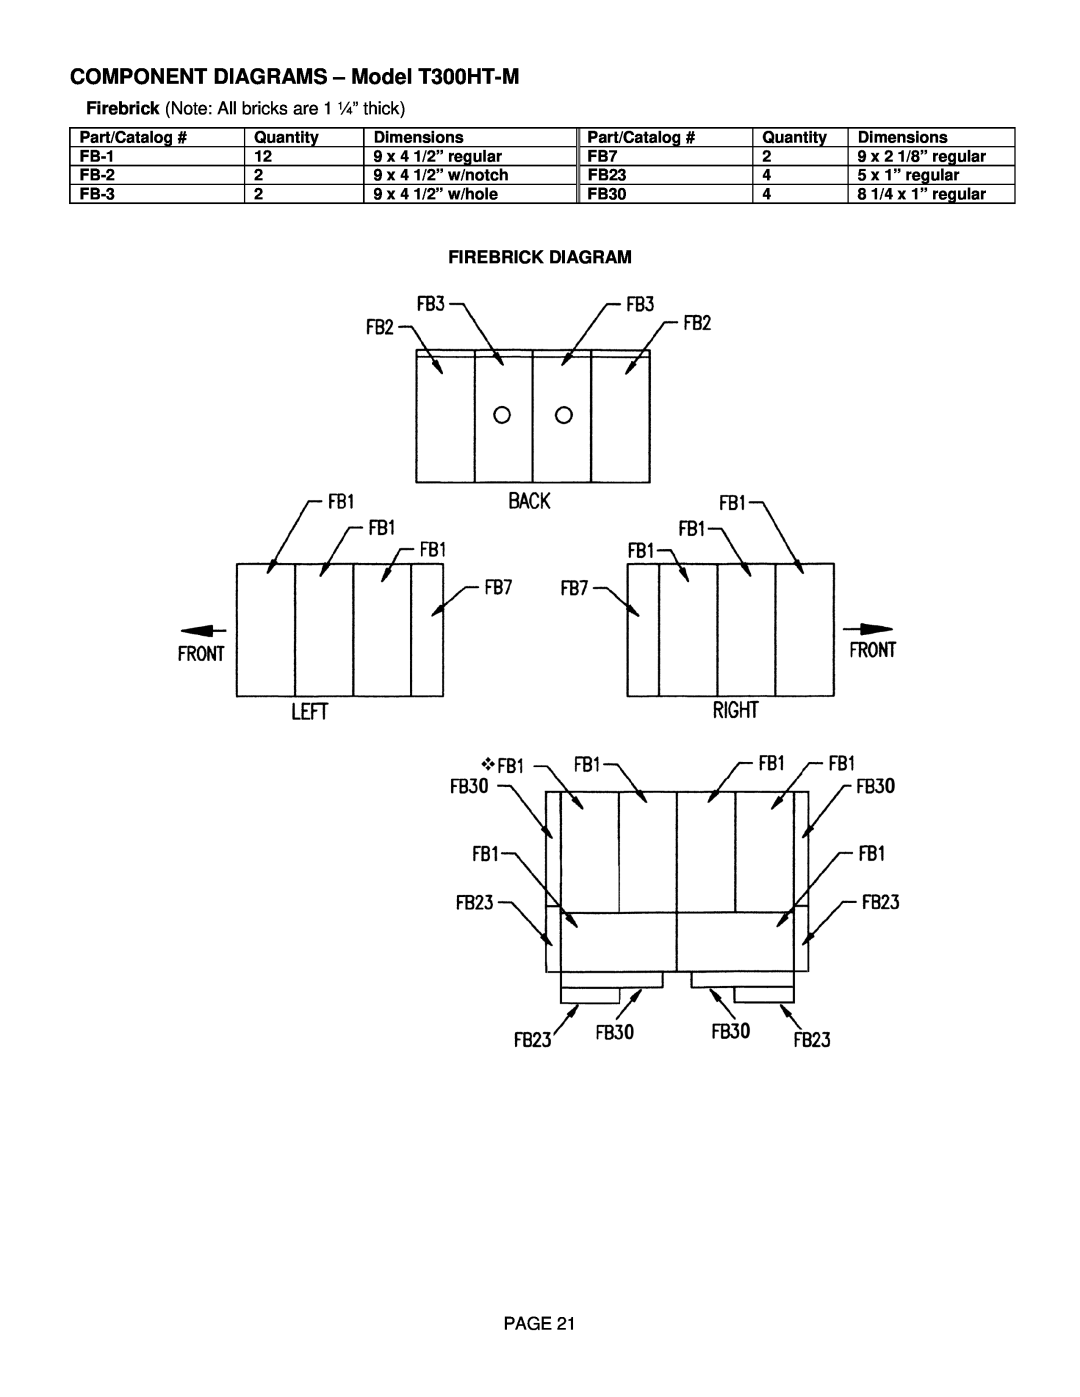 Lennox Hearth manual COMPONENT DIAGRAMS - Model T300HT-M, Firebrick Diagram 